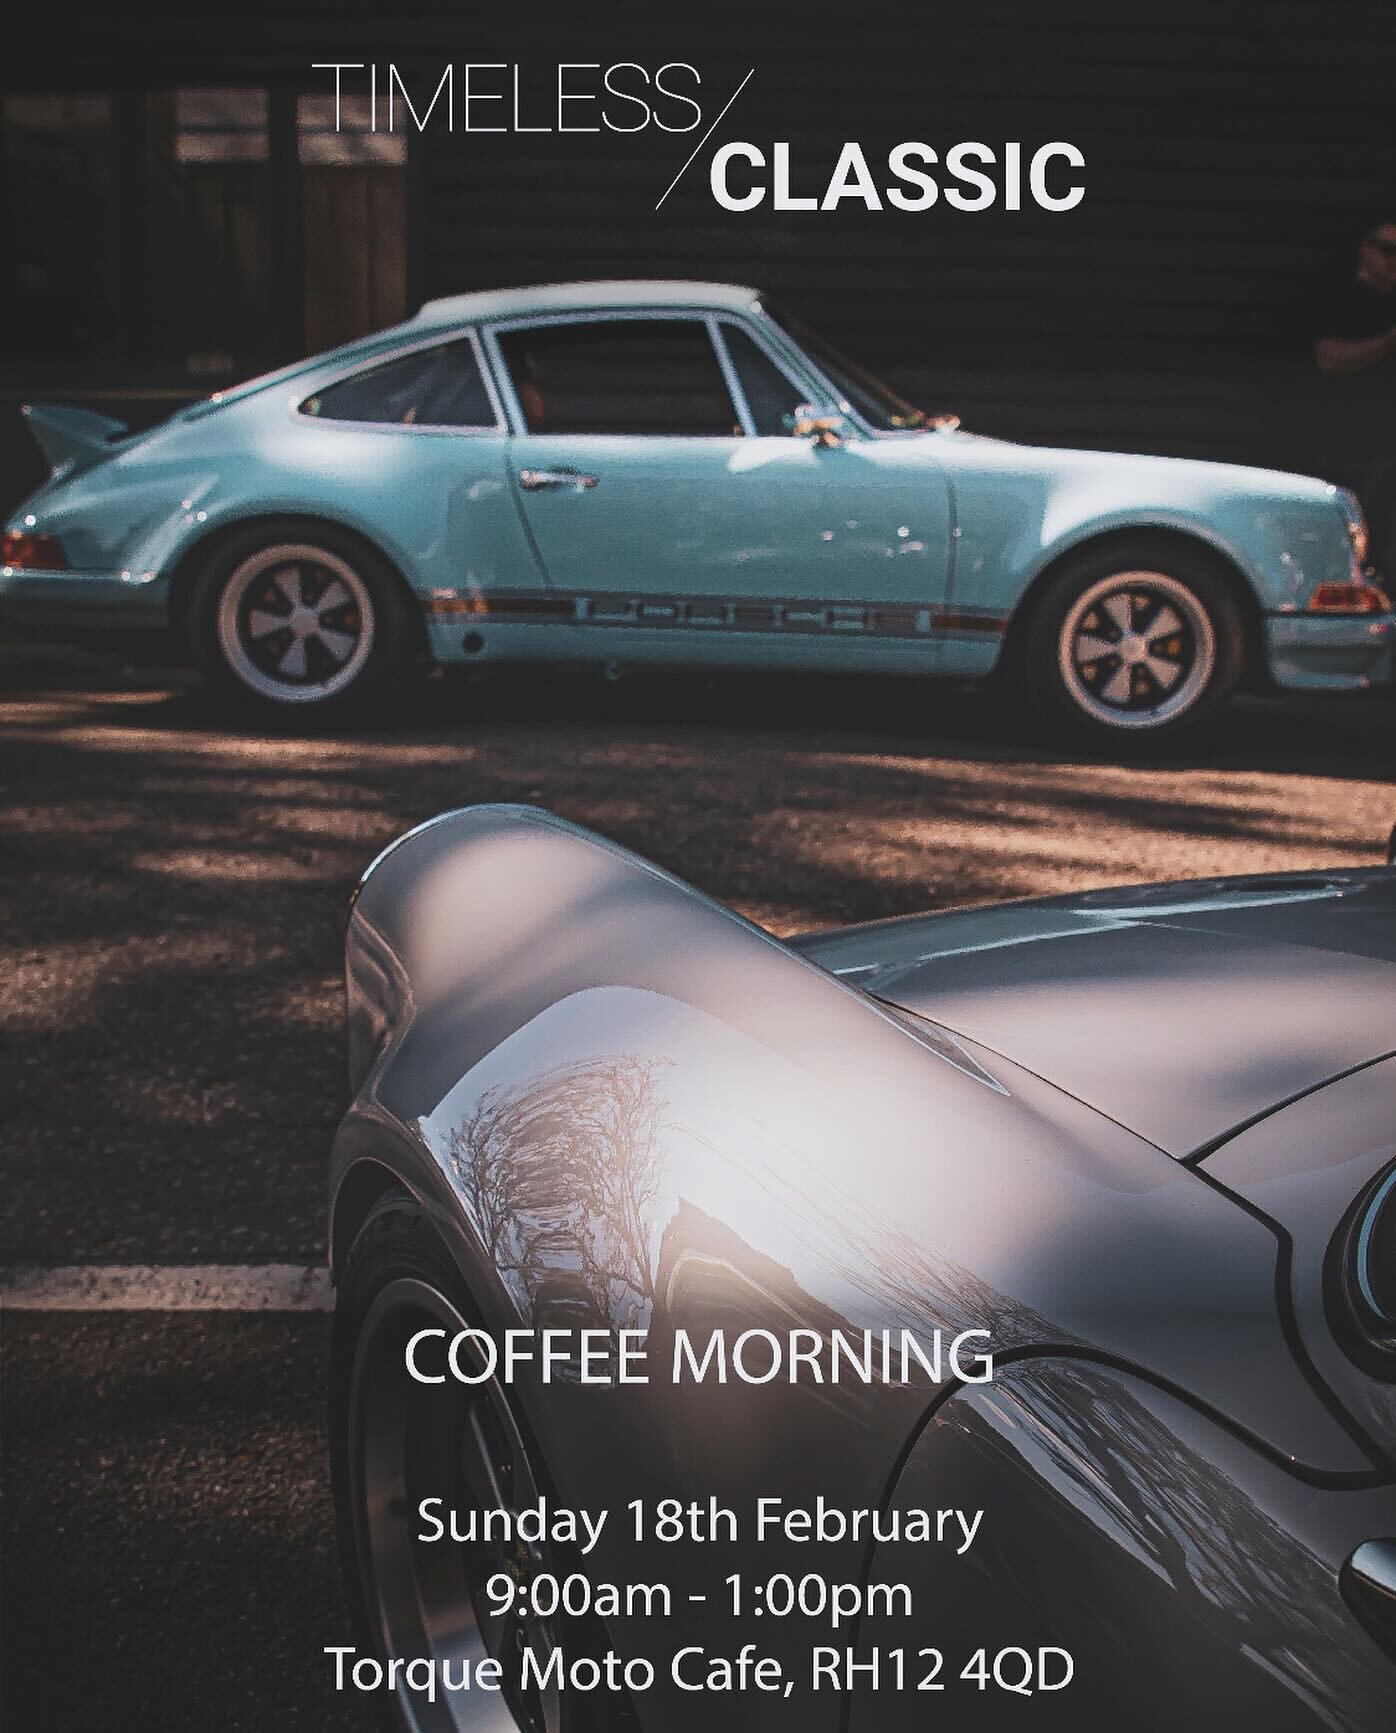 Tomorrow! #classiccars